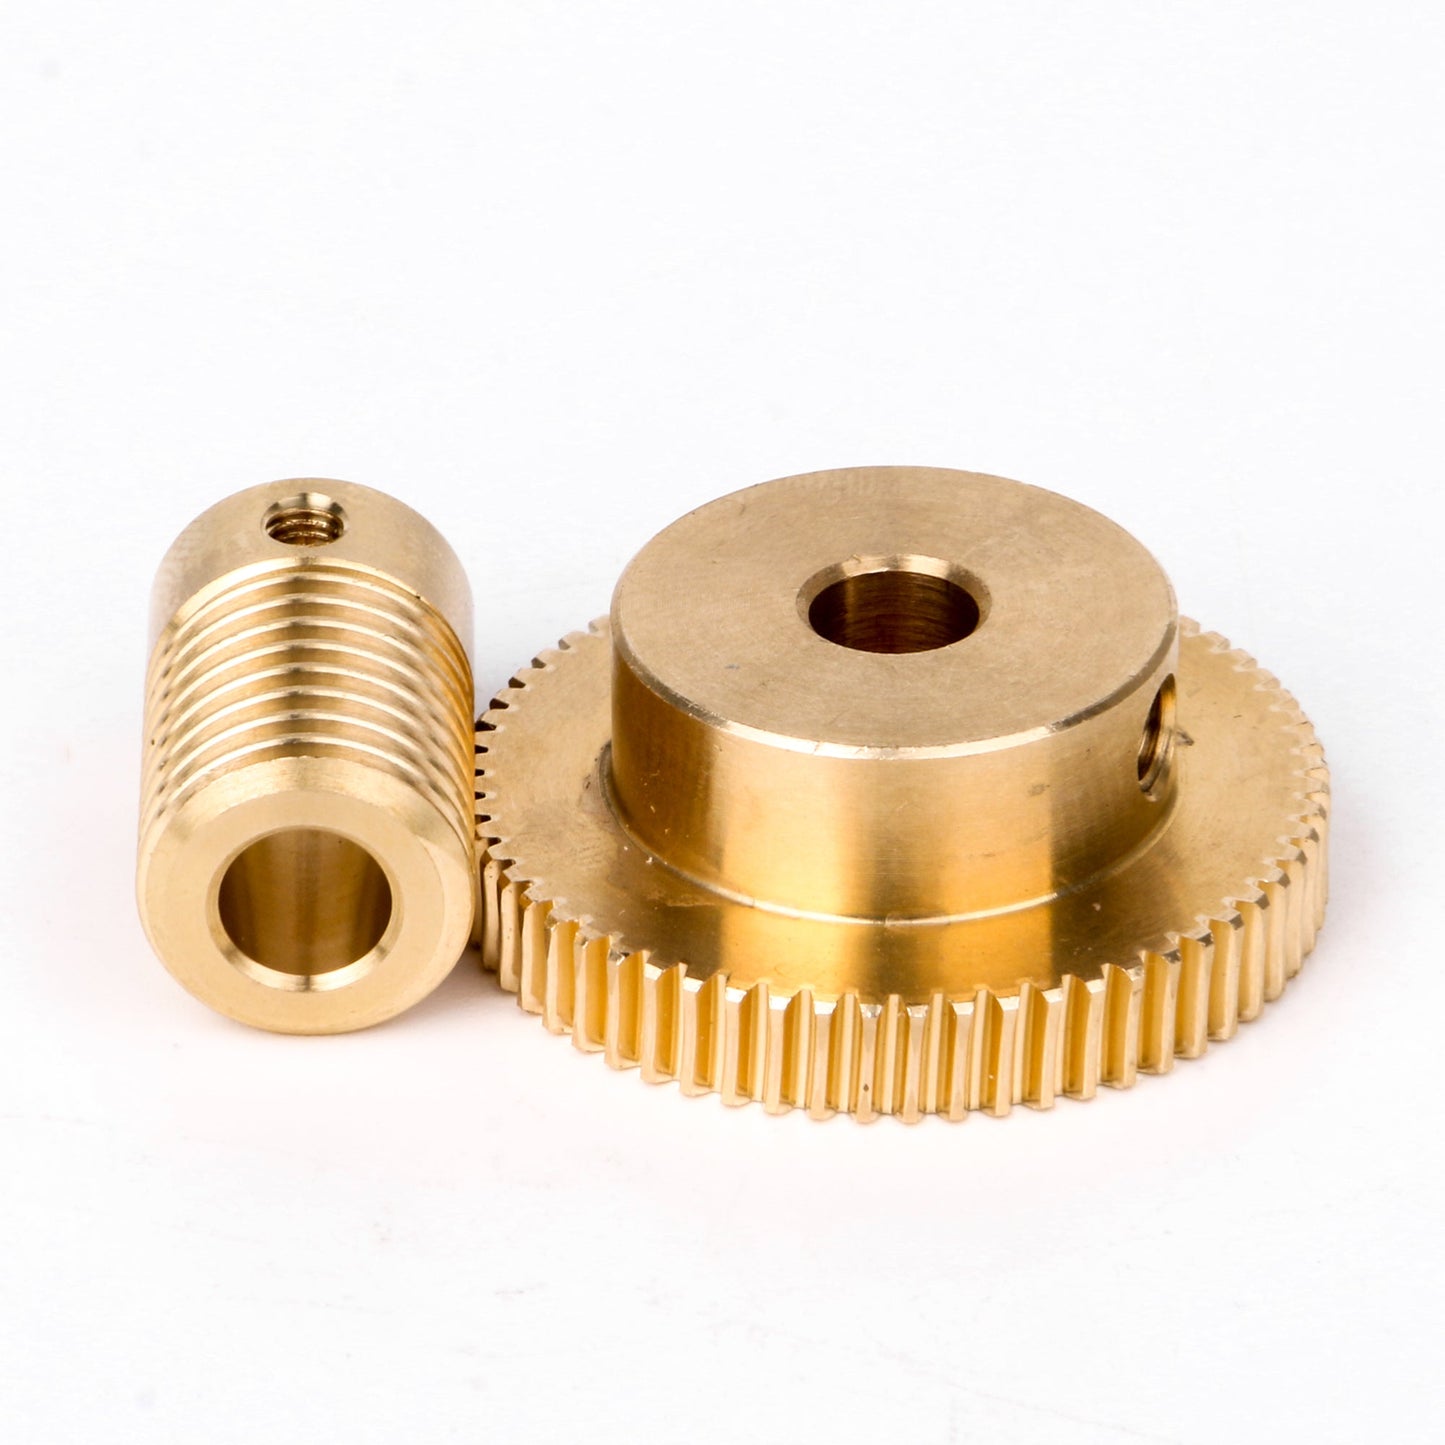 BQLZR Brass Driver Gear Wheel & Shaft 0.5 Modulus 1:60 Reduction 60T 6mm for Extruder